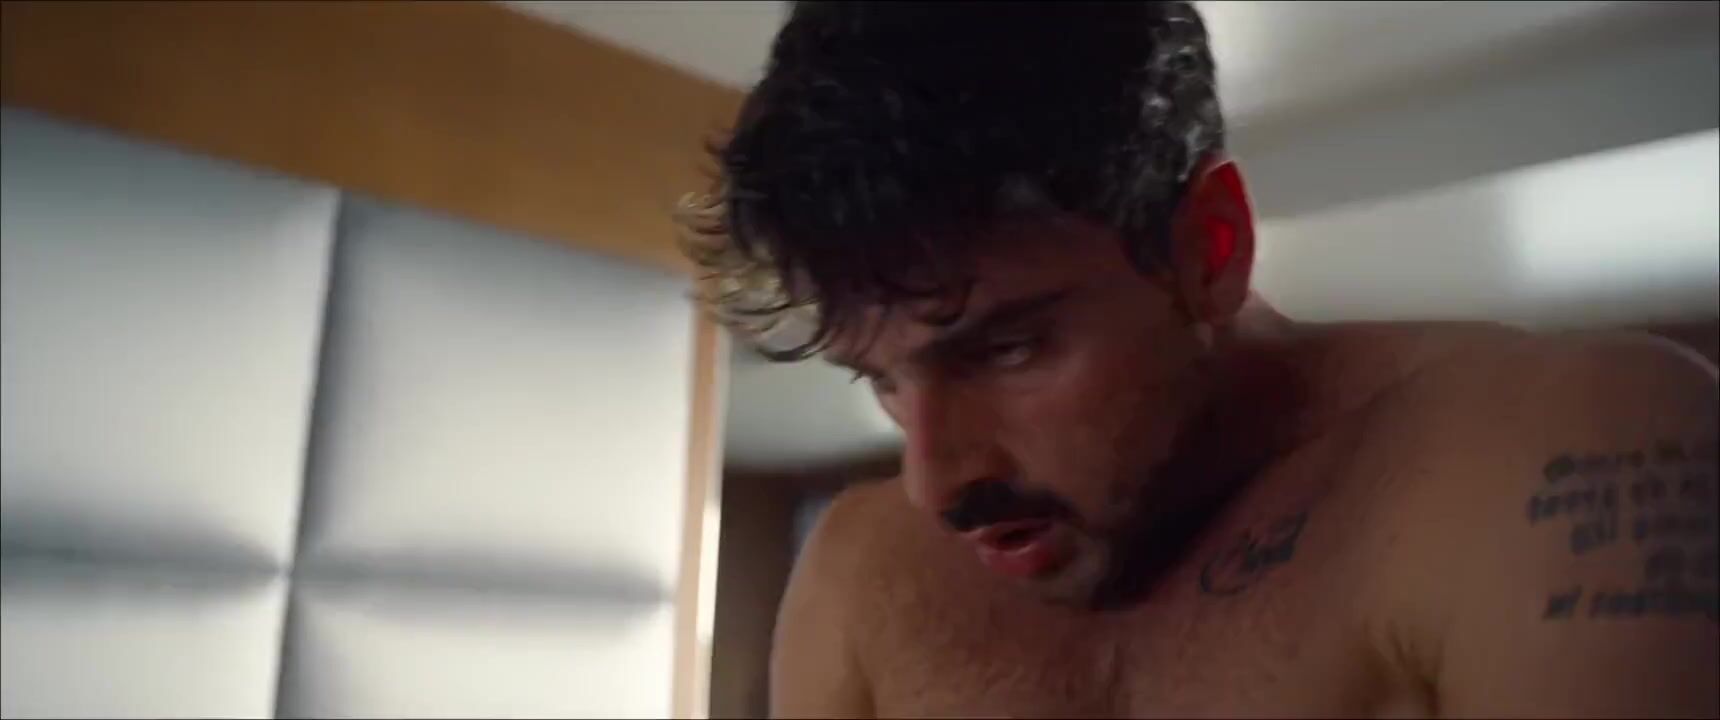 Worship Girl is banged in explicit sex scene from erotic Polish movie 365 dni (2020) Tgirls